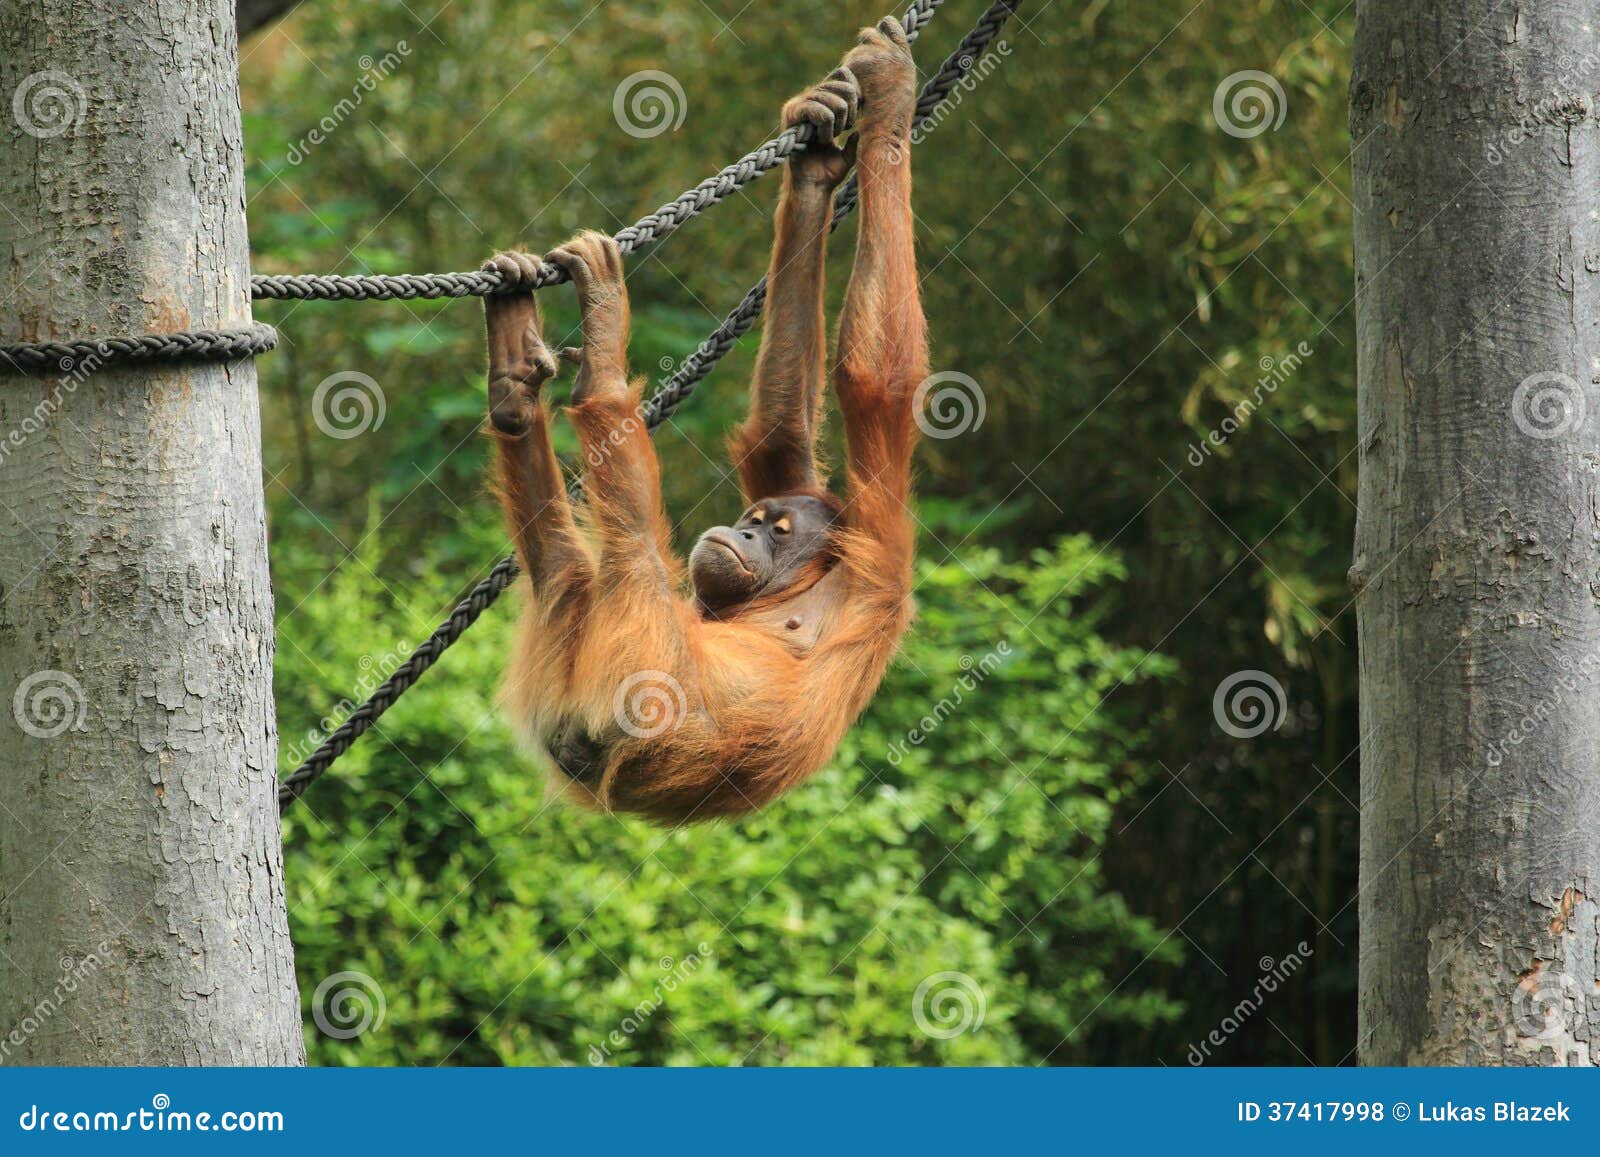 sumatran orangutan juvenile